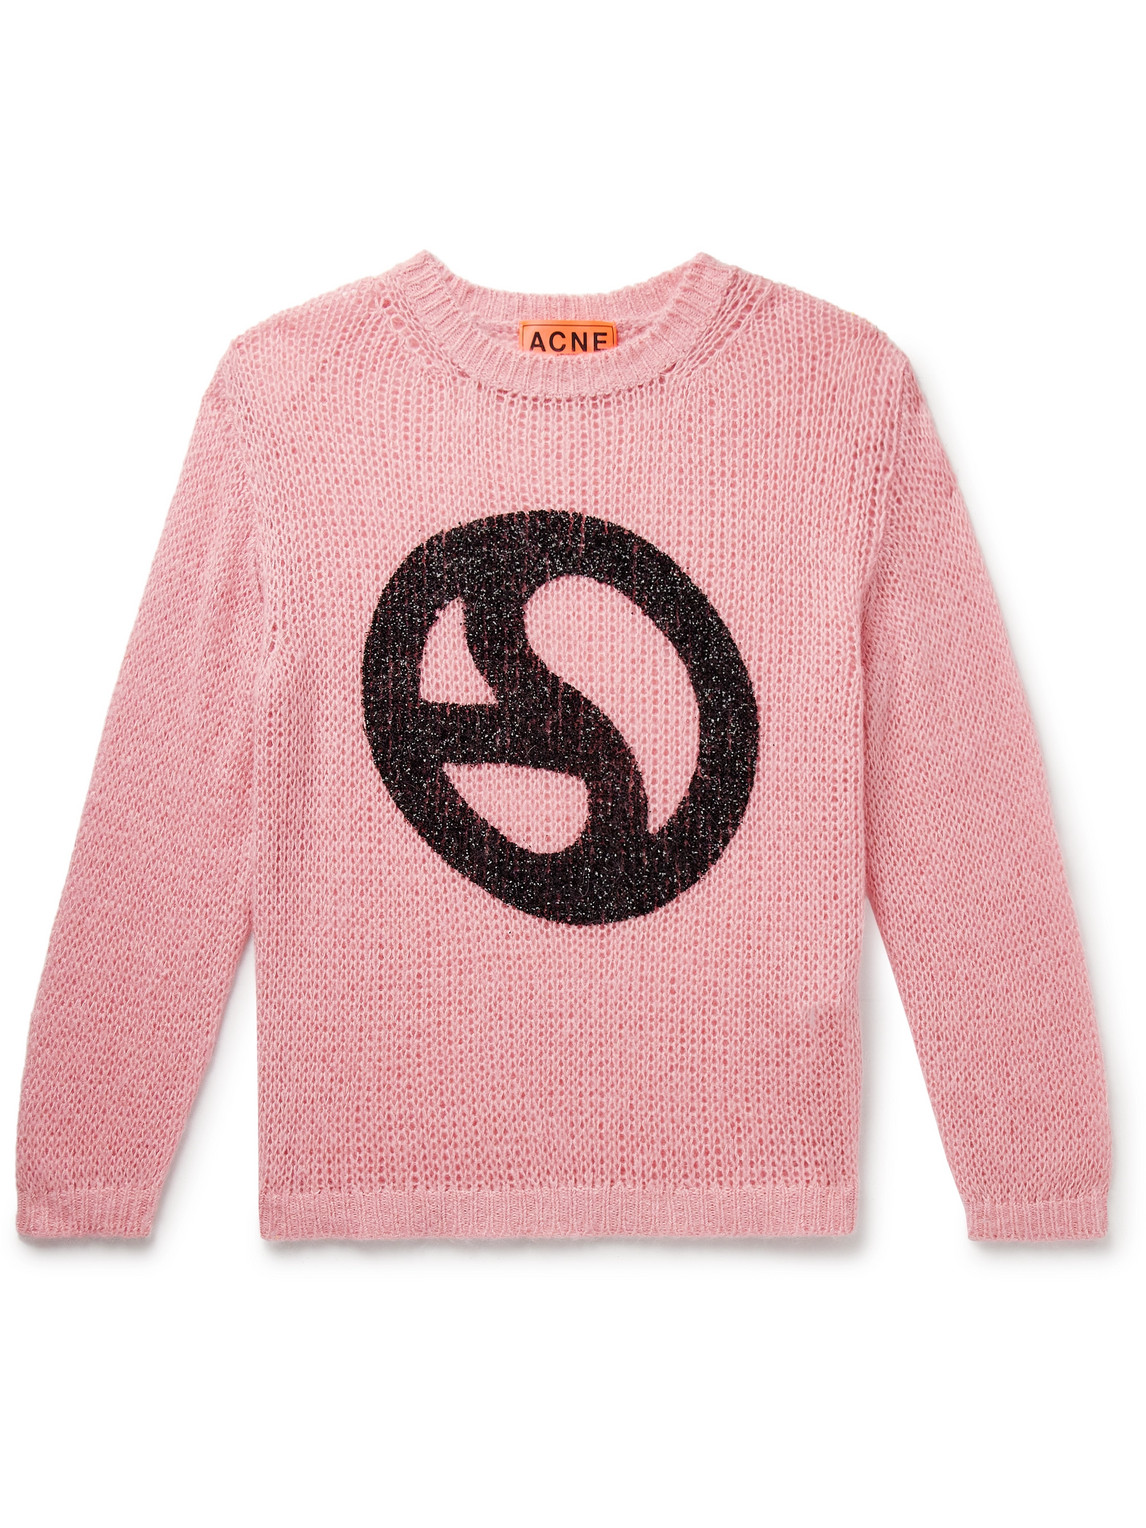 Acne Studios - Kitaly Glittered Logo-Print Knitted Sweater - Men - Pink - S von Acne Studios